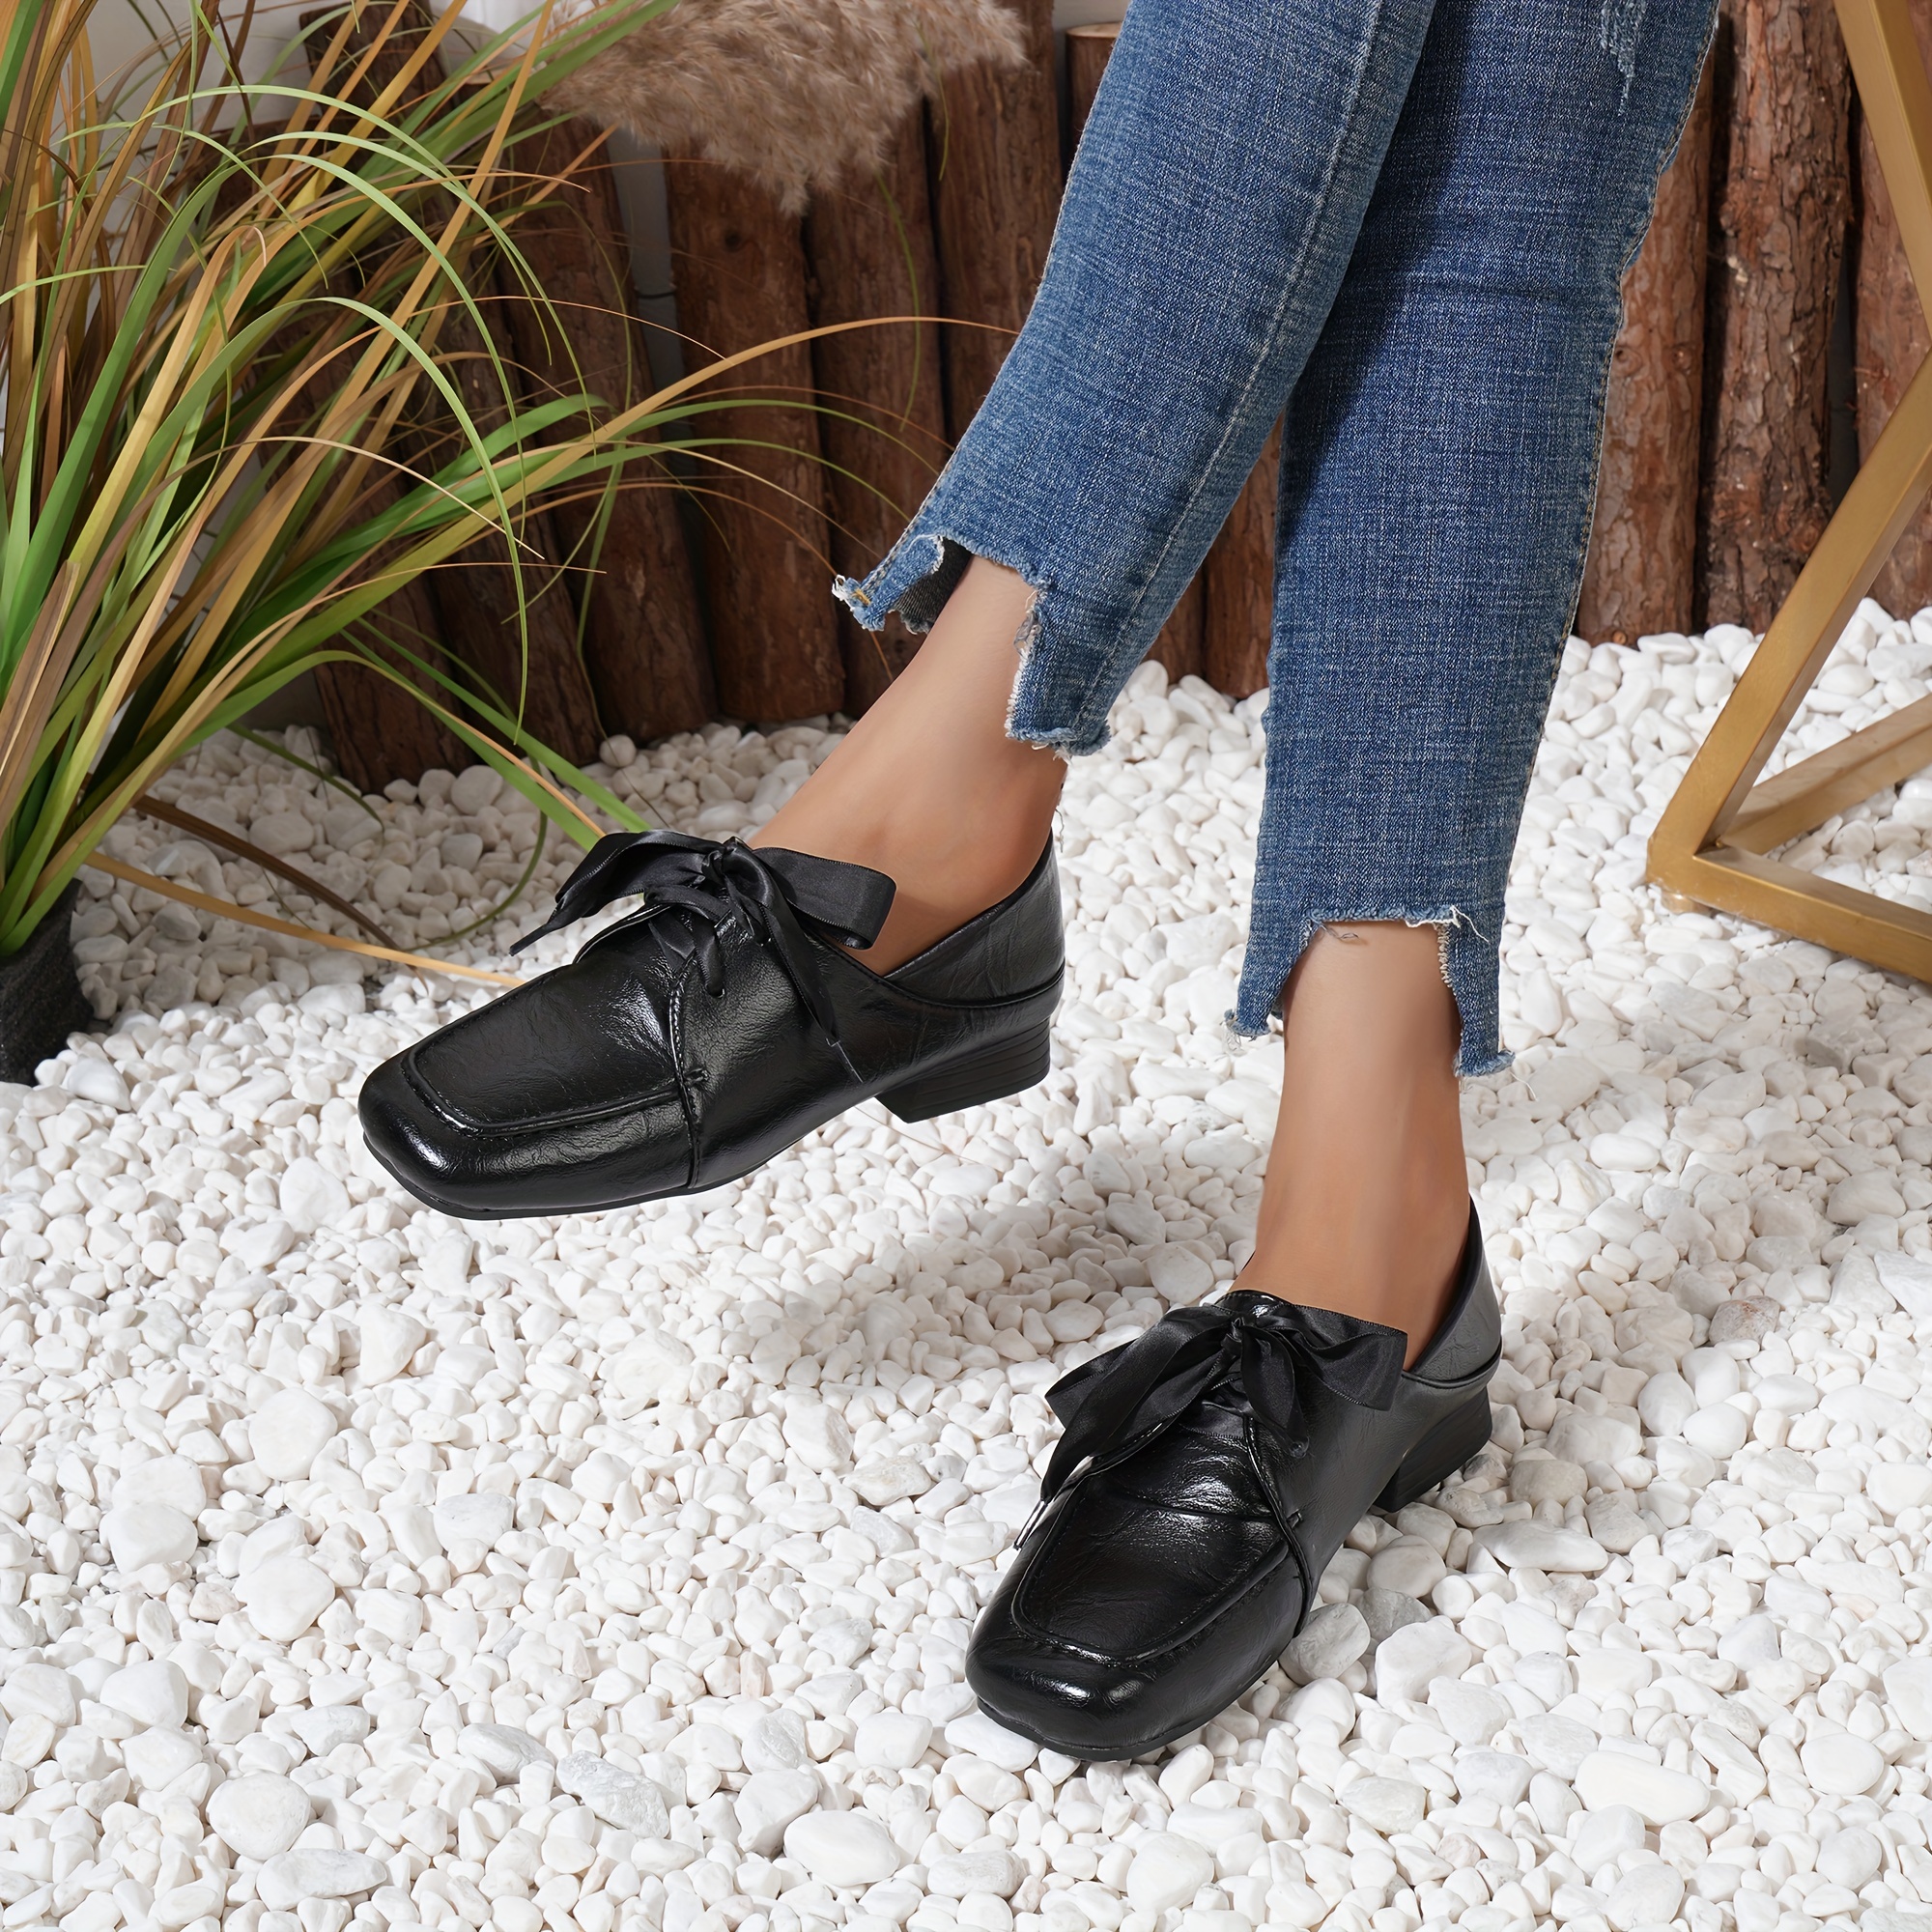 Women's Solid Color Platform Loafers, Lace Up Low-top Round Toe Block Heel  Non-slip Shoes, Versatile Comfy Shoes